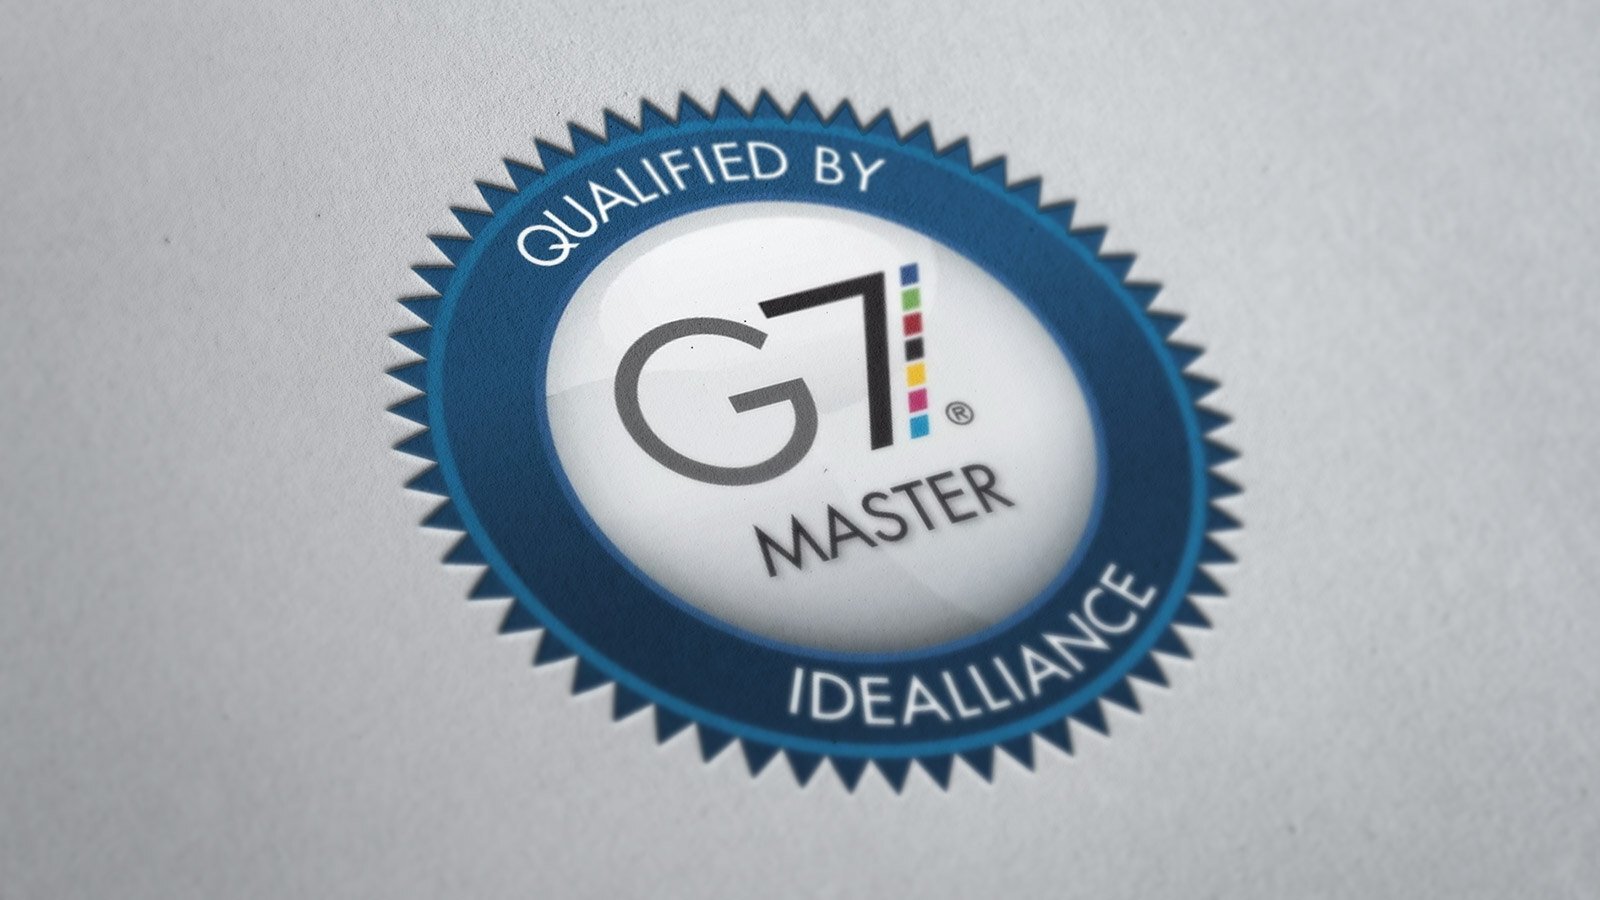 G7 Master Certification logo